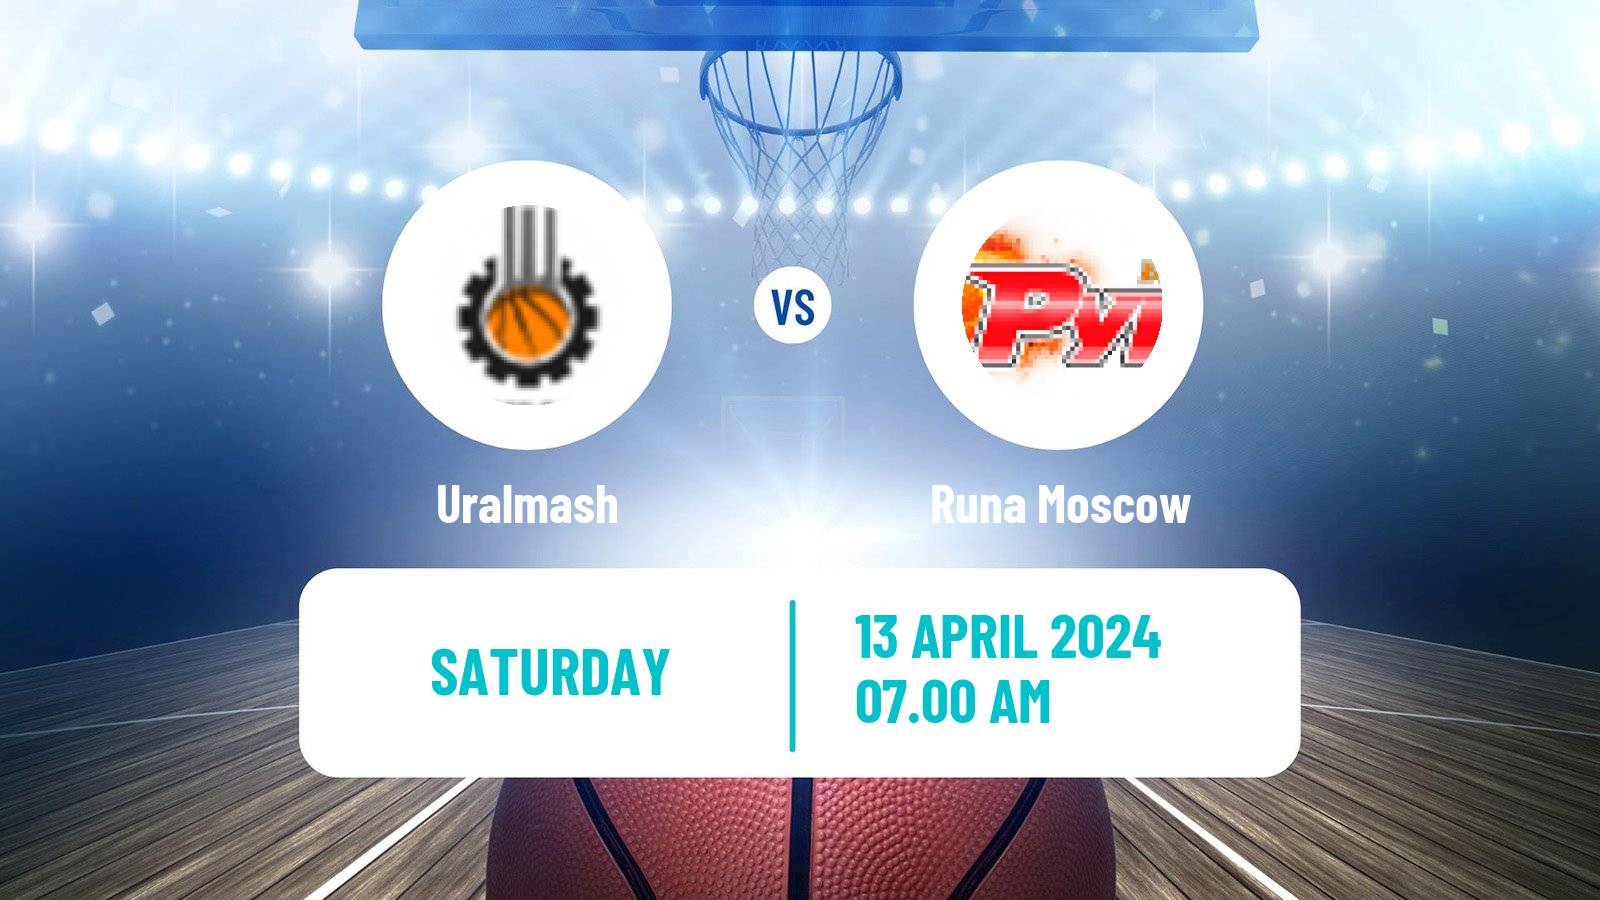 Basketball VTB United League Uralmash - Runa Moscow